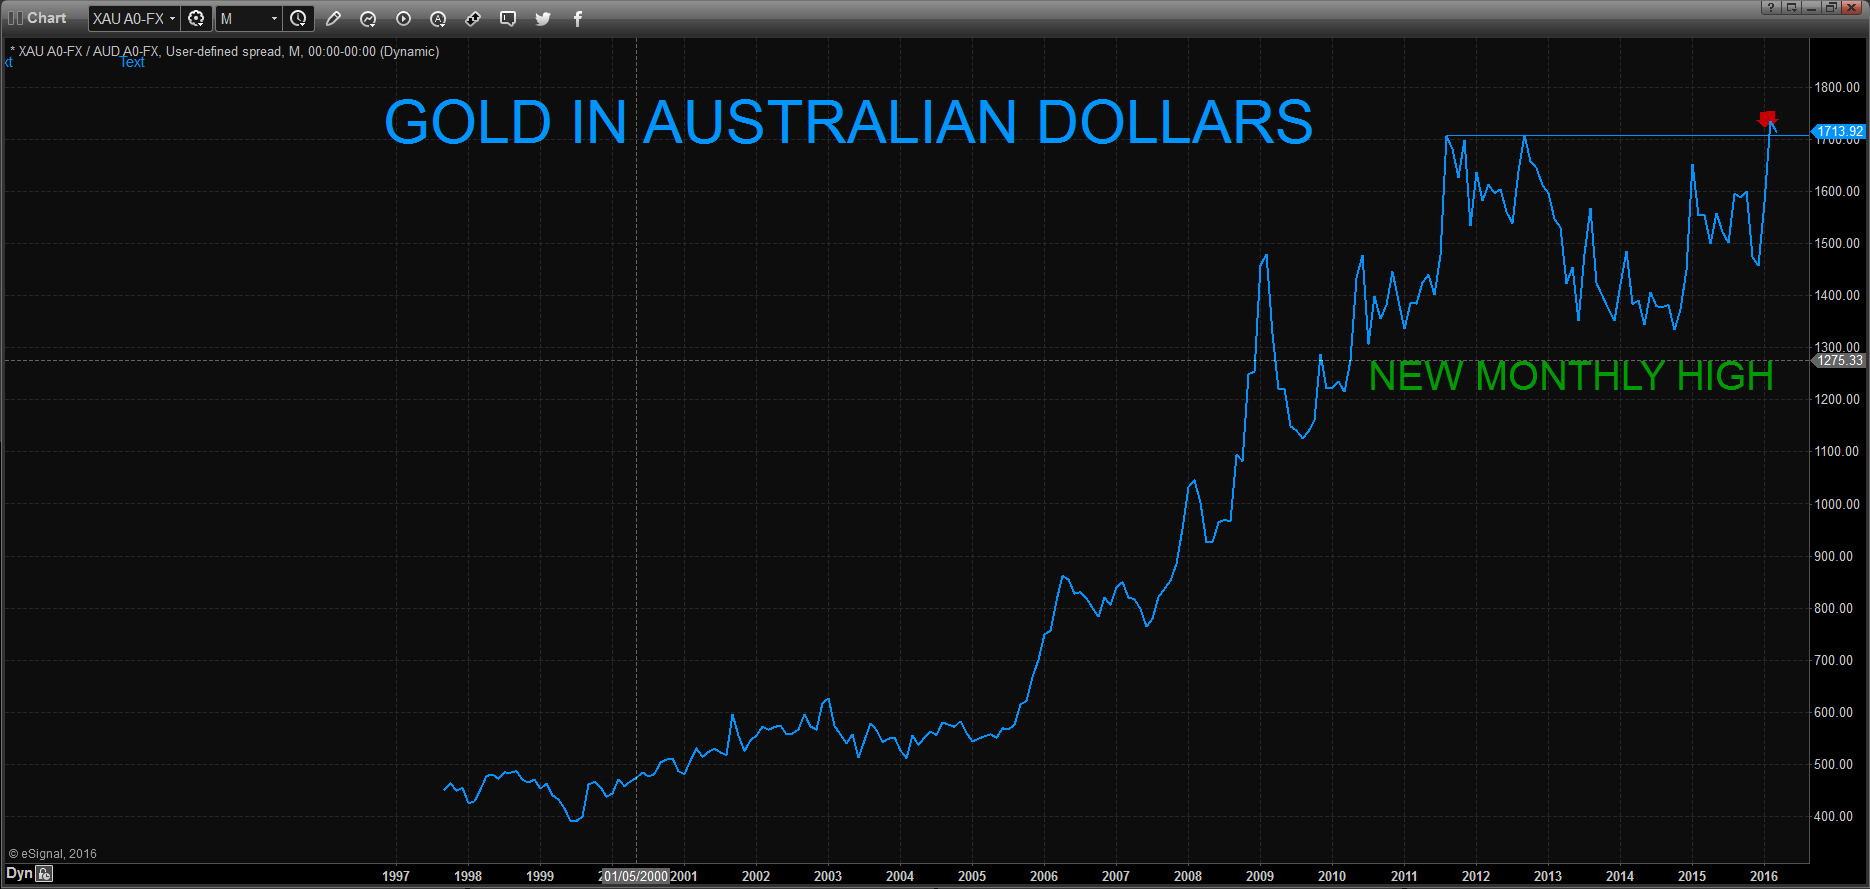 Gold in Australian Dollars